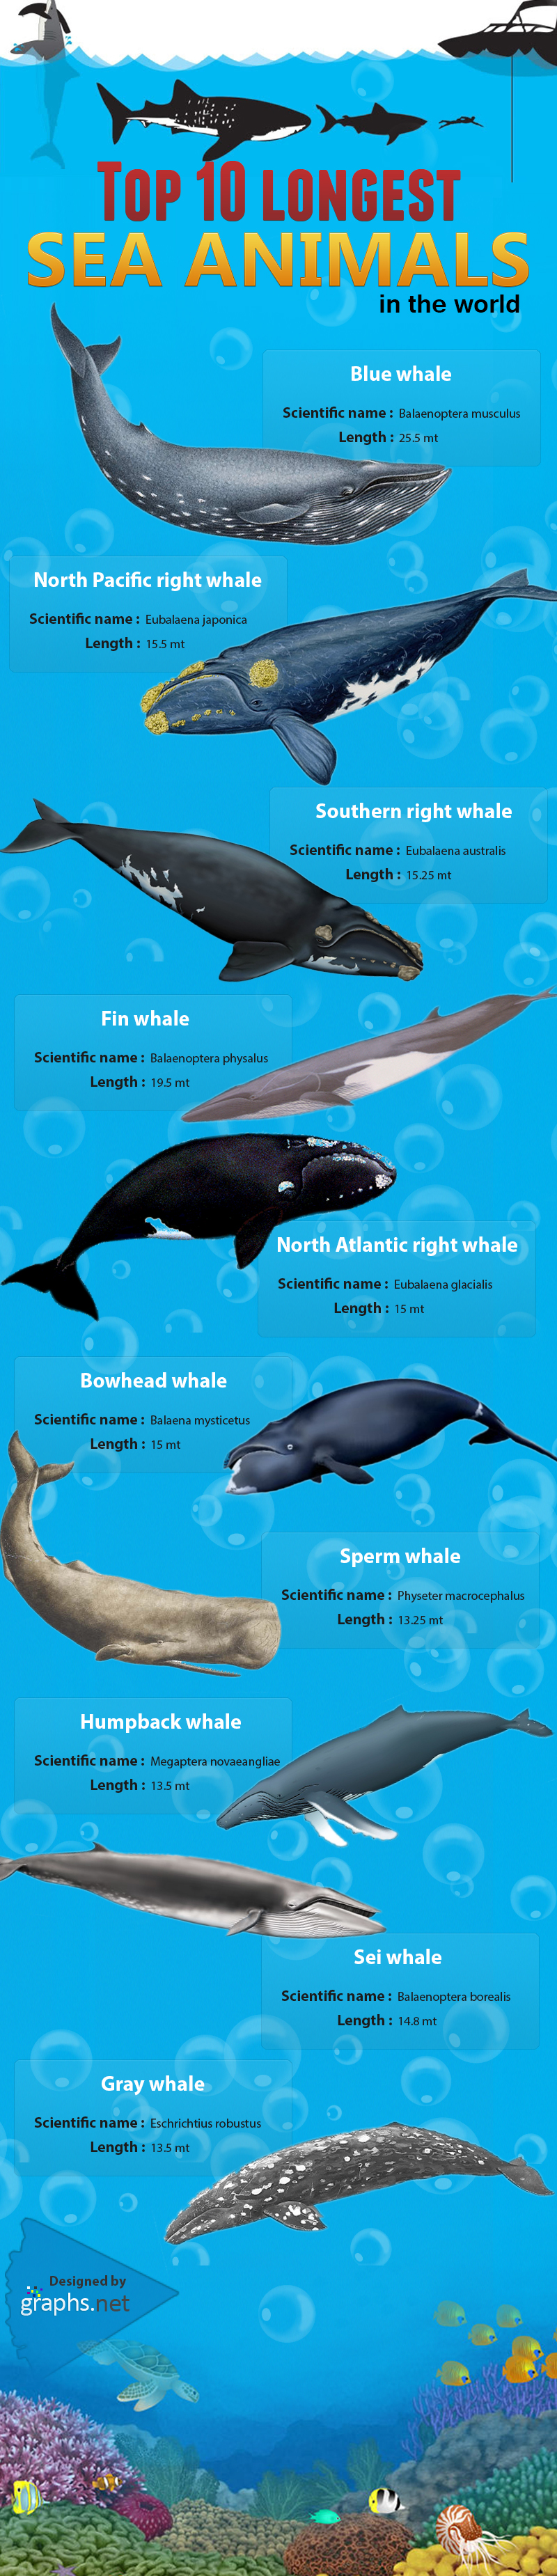 Infographic: Top 10 Longest Sea Animals in the World - MaritimeCyprus